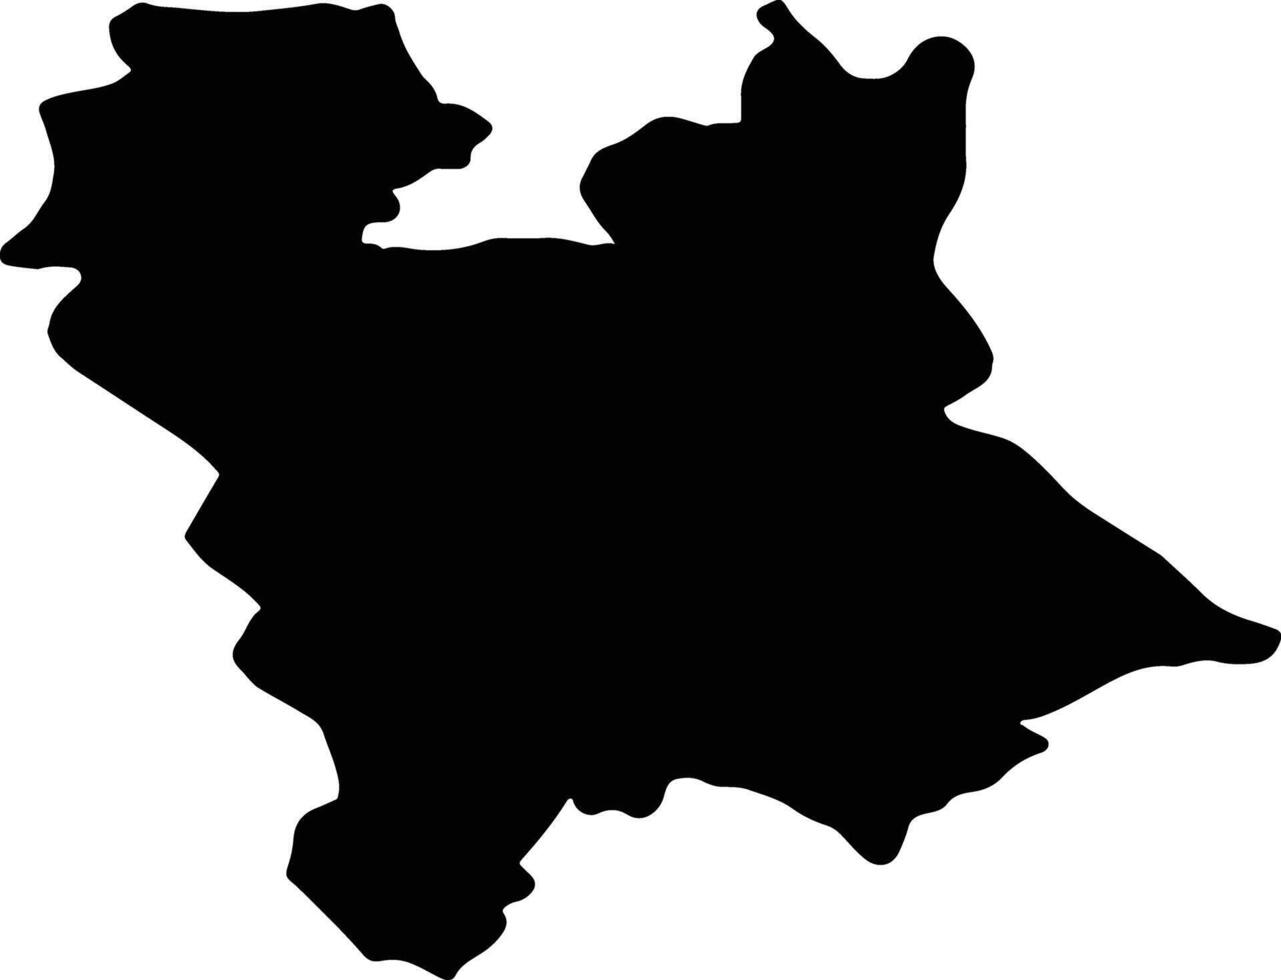 srednje-banatski Republik von Serbien Silhouette Karte vektor